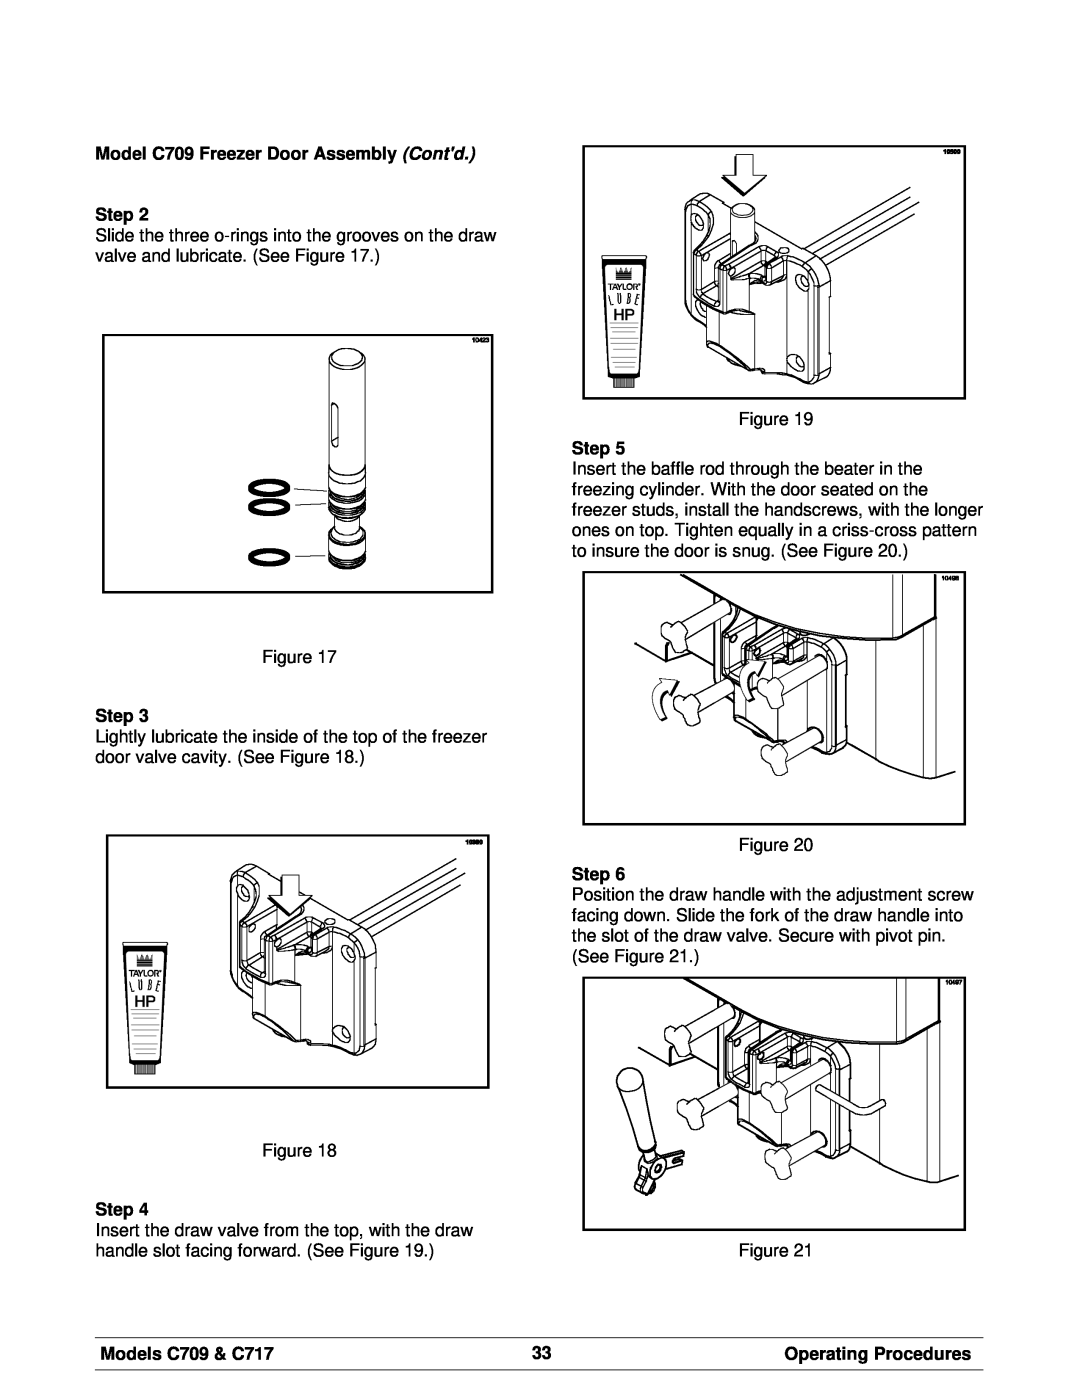 Taylor manual Model C709 Freezer Door Assembly Contd Step, Models C709 & C717, Operating Procedures 